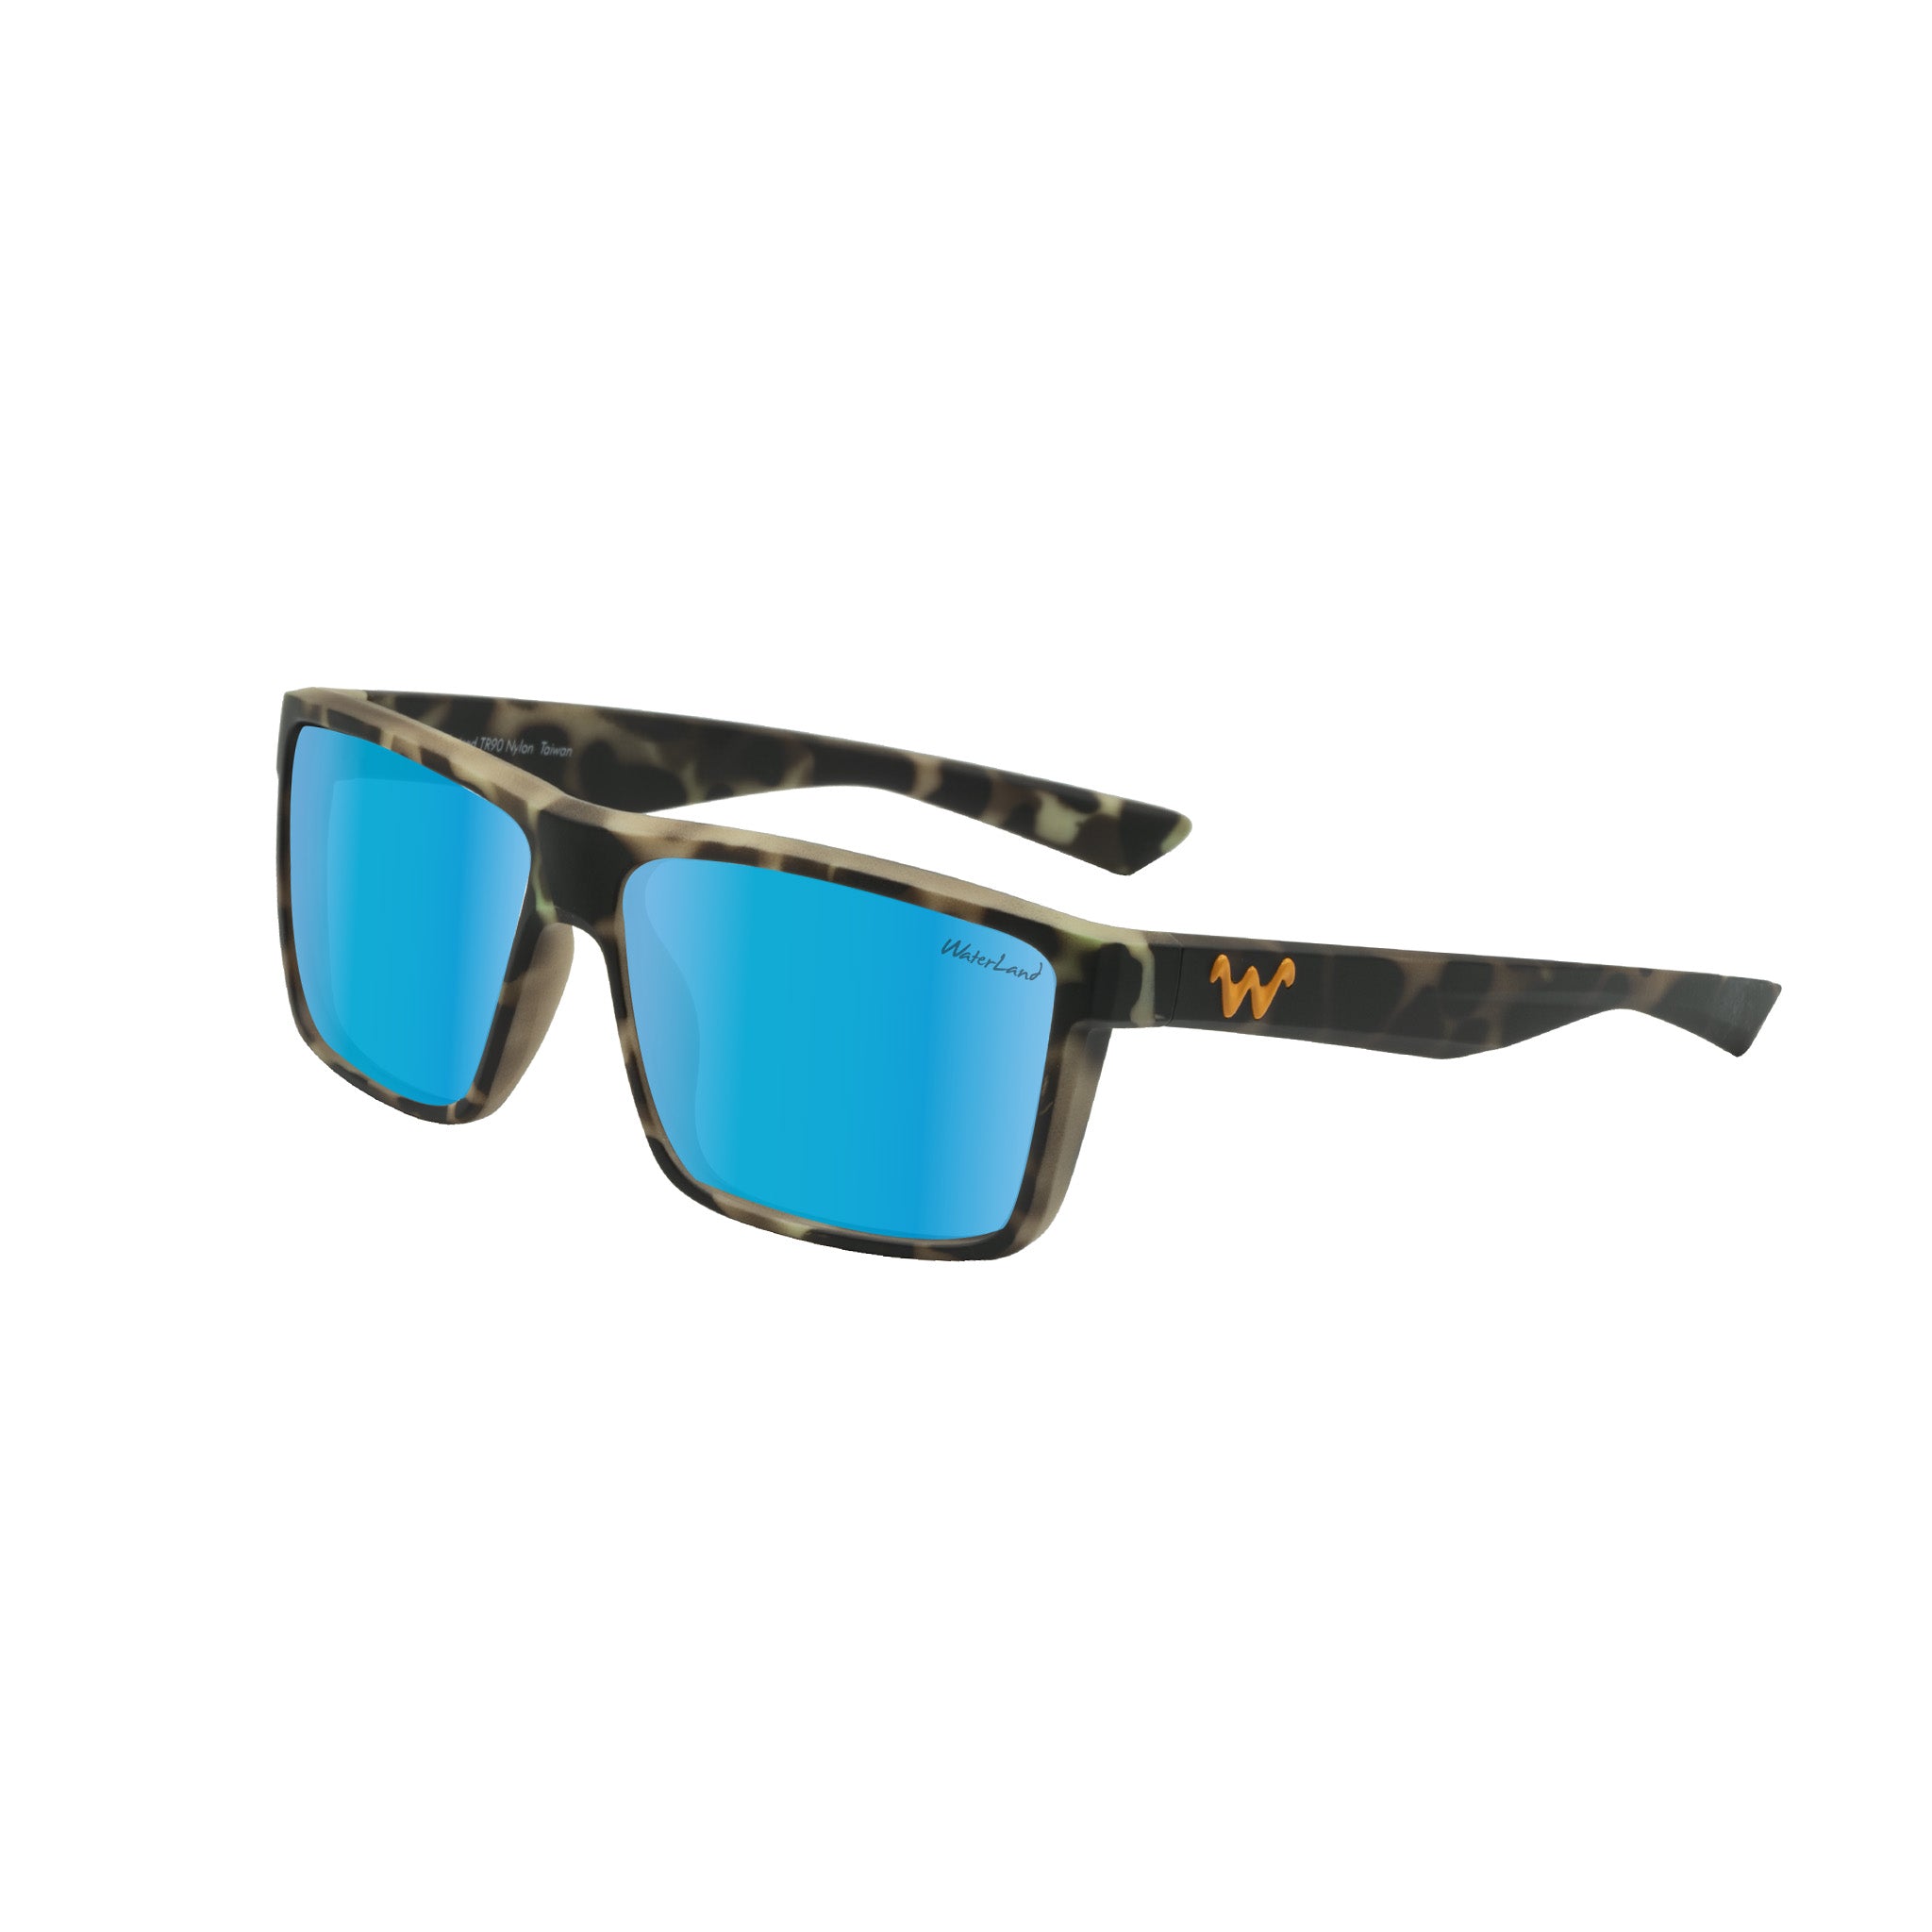 Waterland Polarized Sunglasses - Slaunch - Waterwood Blue Mirror